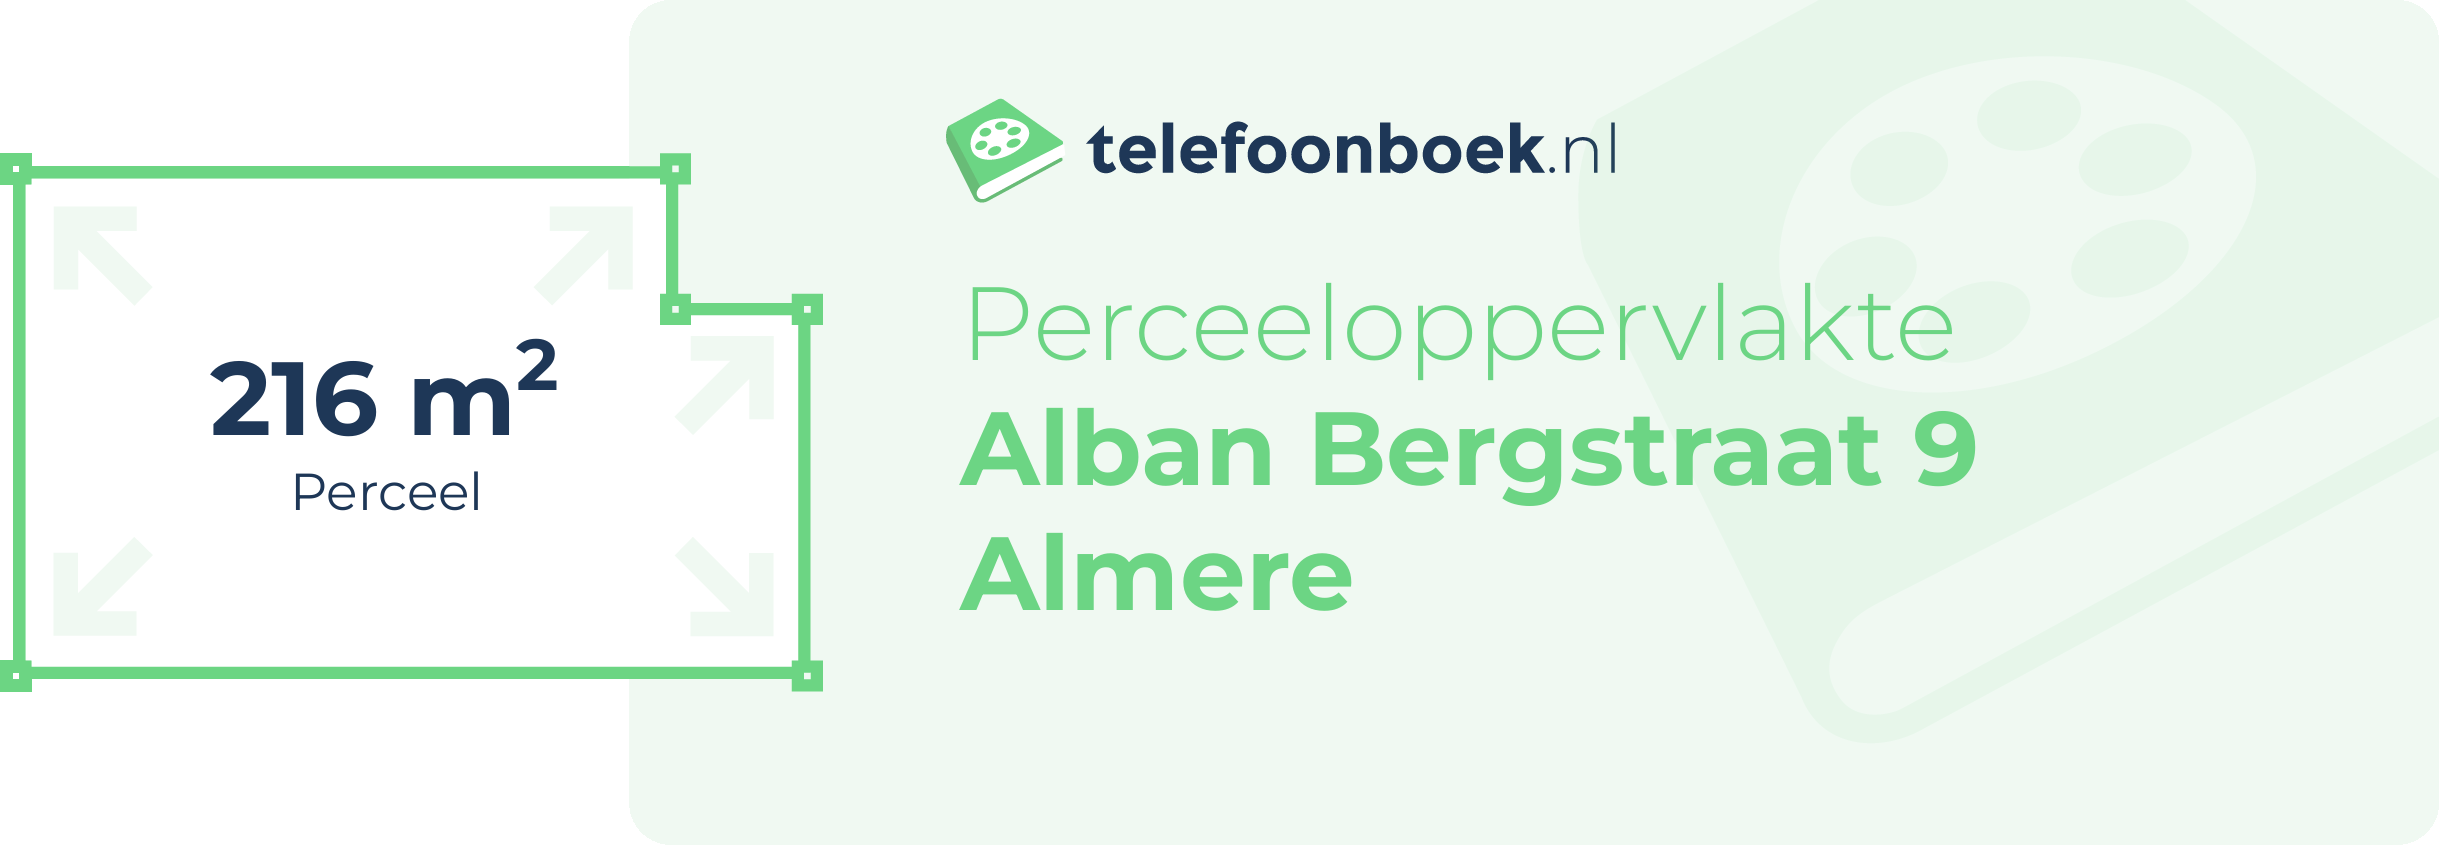 Perceeloppervlakte Alban Bergstraat 9 Almere